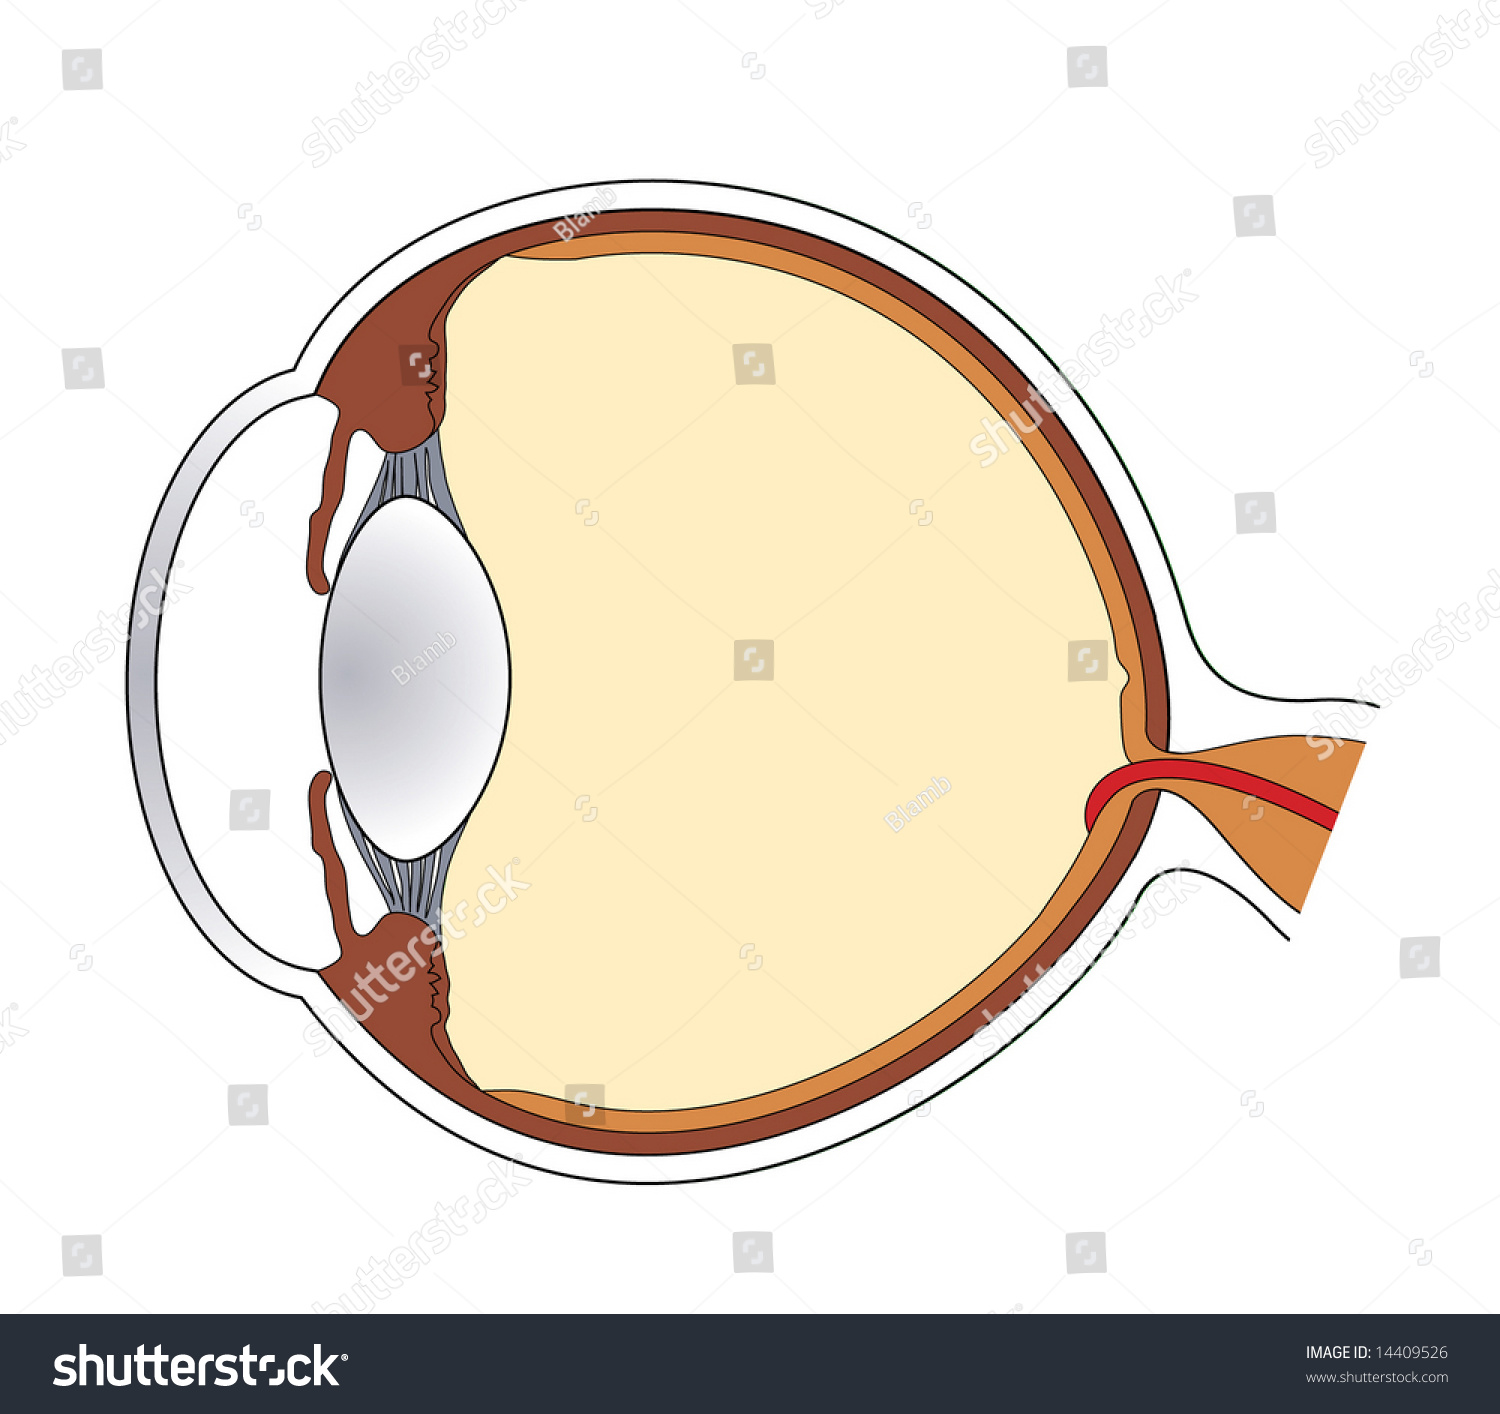 Cross-Section Of Human Eye Stock Photo 14409526 : Shutterstock